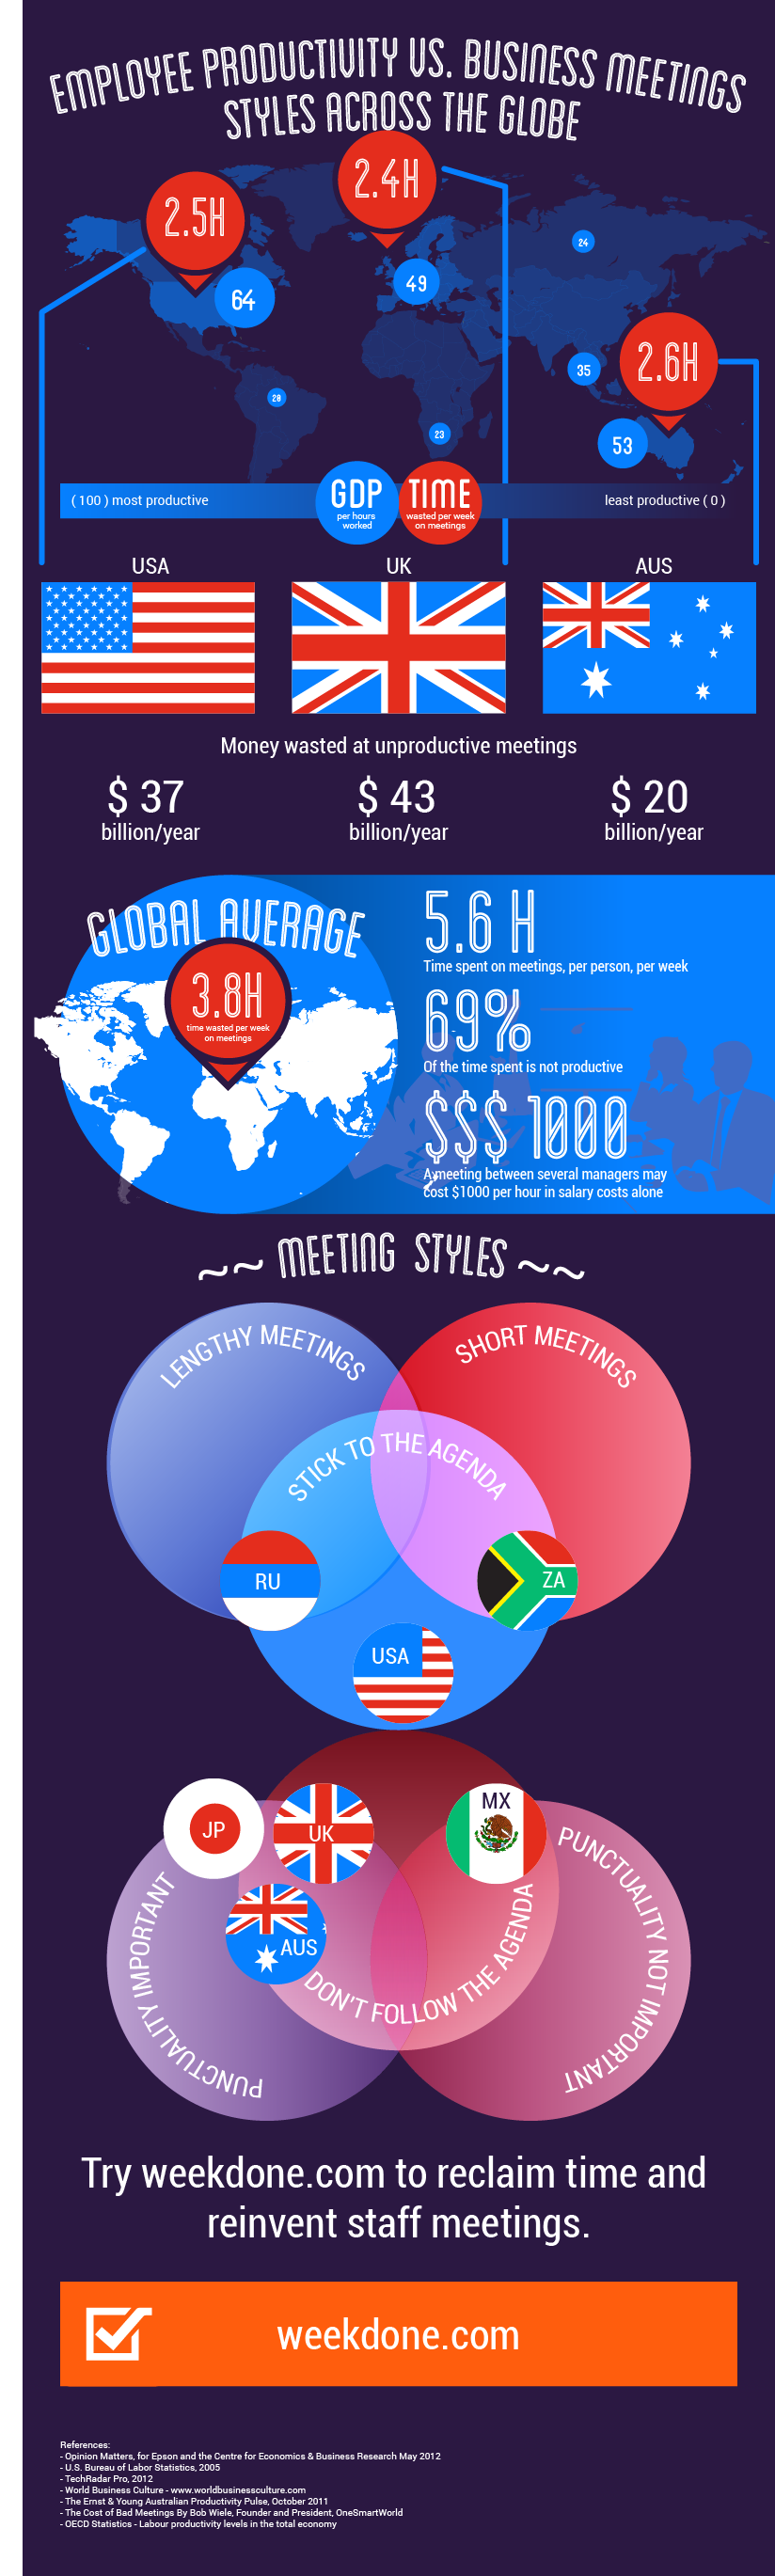 Meetings around the globe